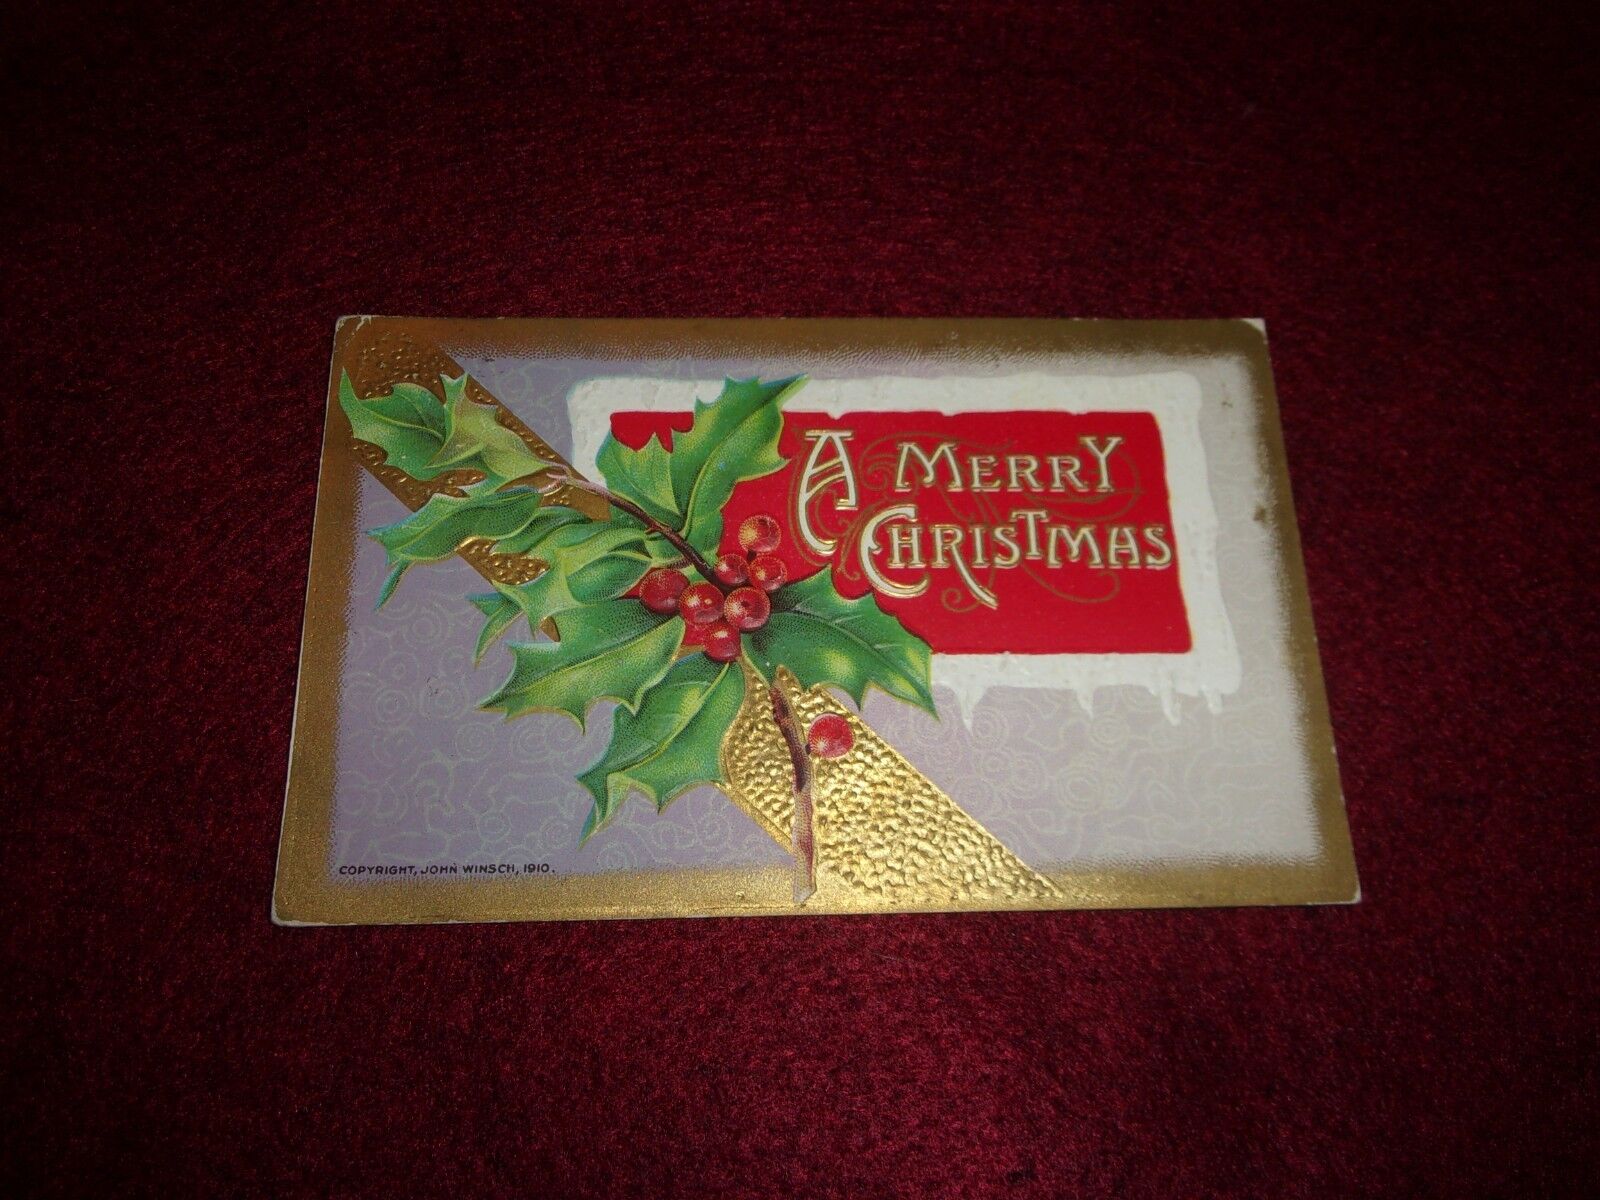 Antique Vintage Christmas Postcard  A Merry Christmas John Winsch 1910